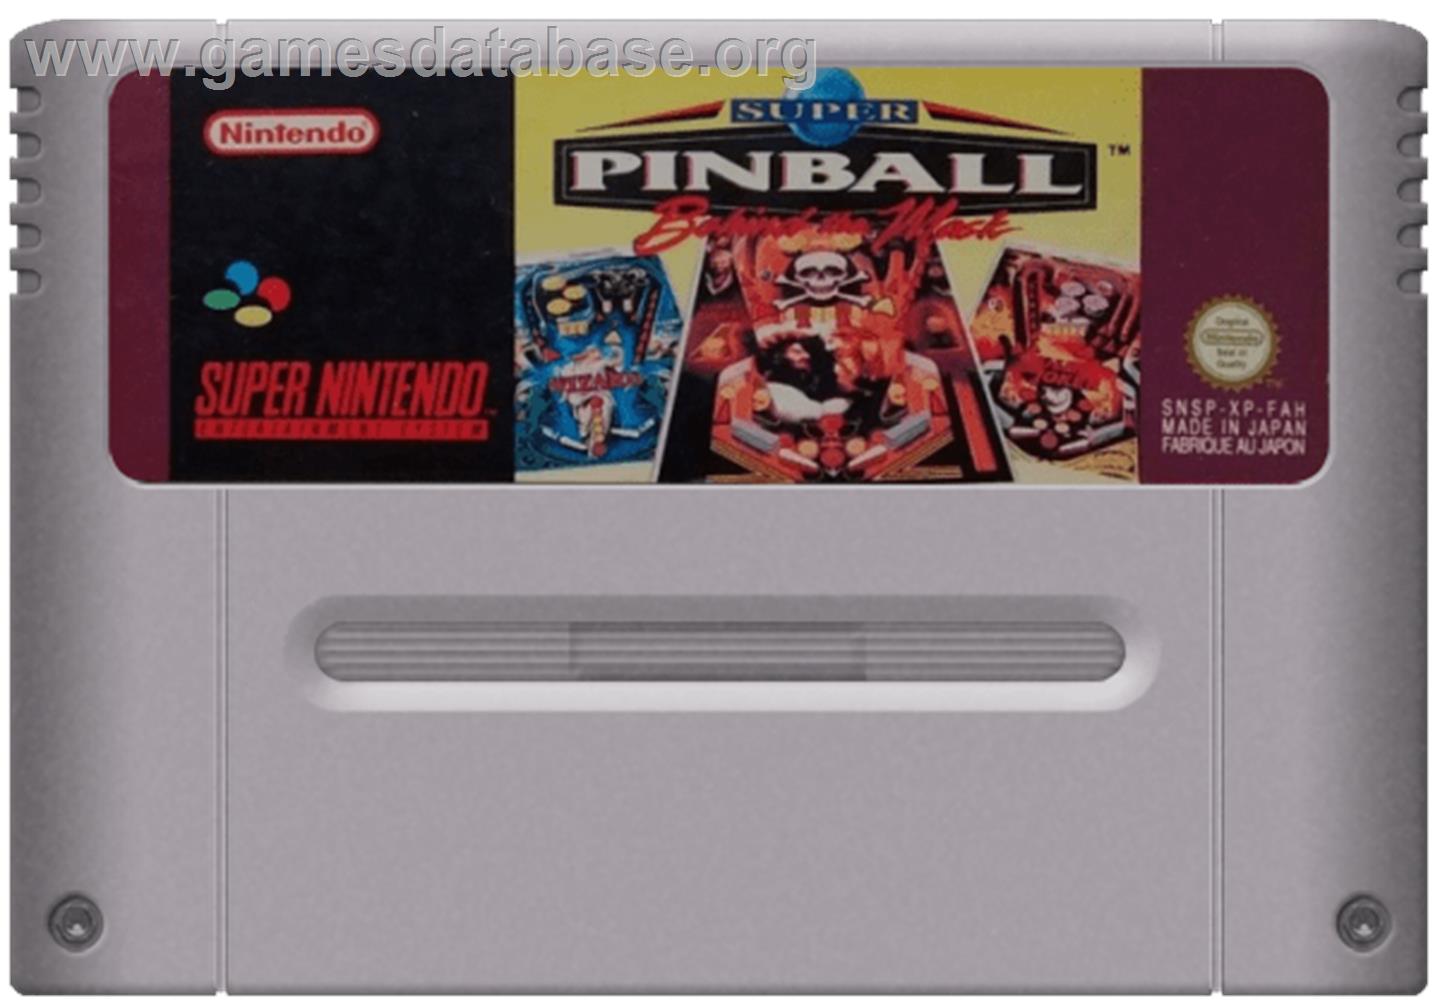 Super Pinball: Behind the Mask - Nintendo SNES - Artwork - Cartridge